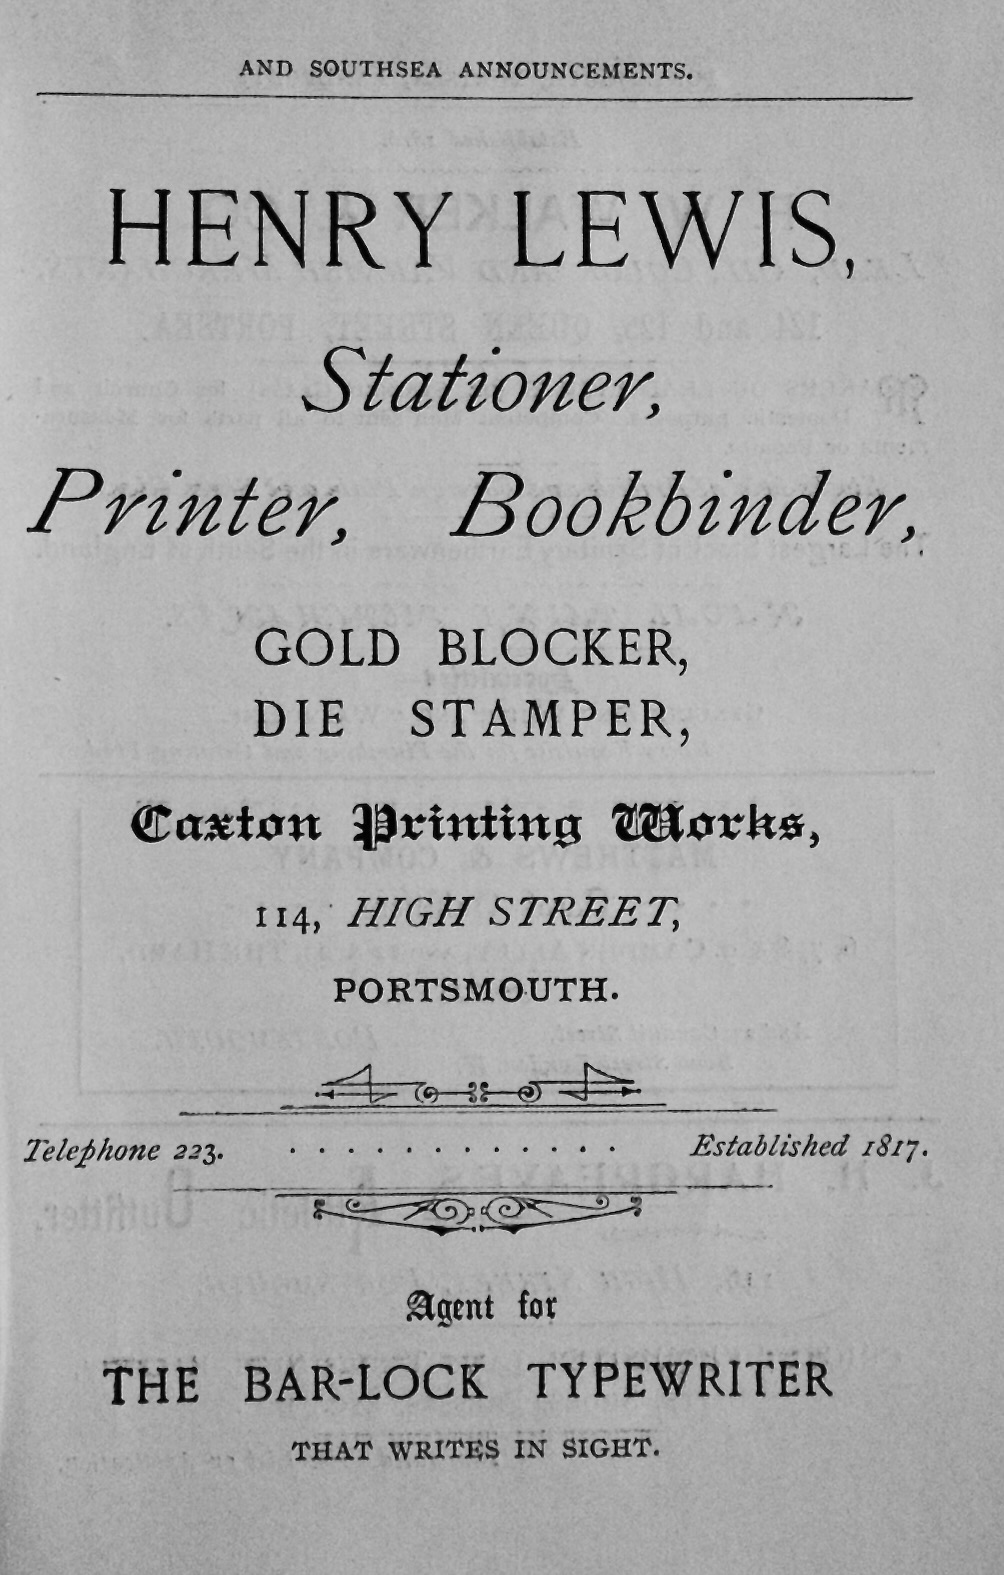 Henry Lewis, Stationer, Printer, Bookbinder.   Caxton Printing Works, 114, 